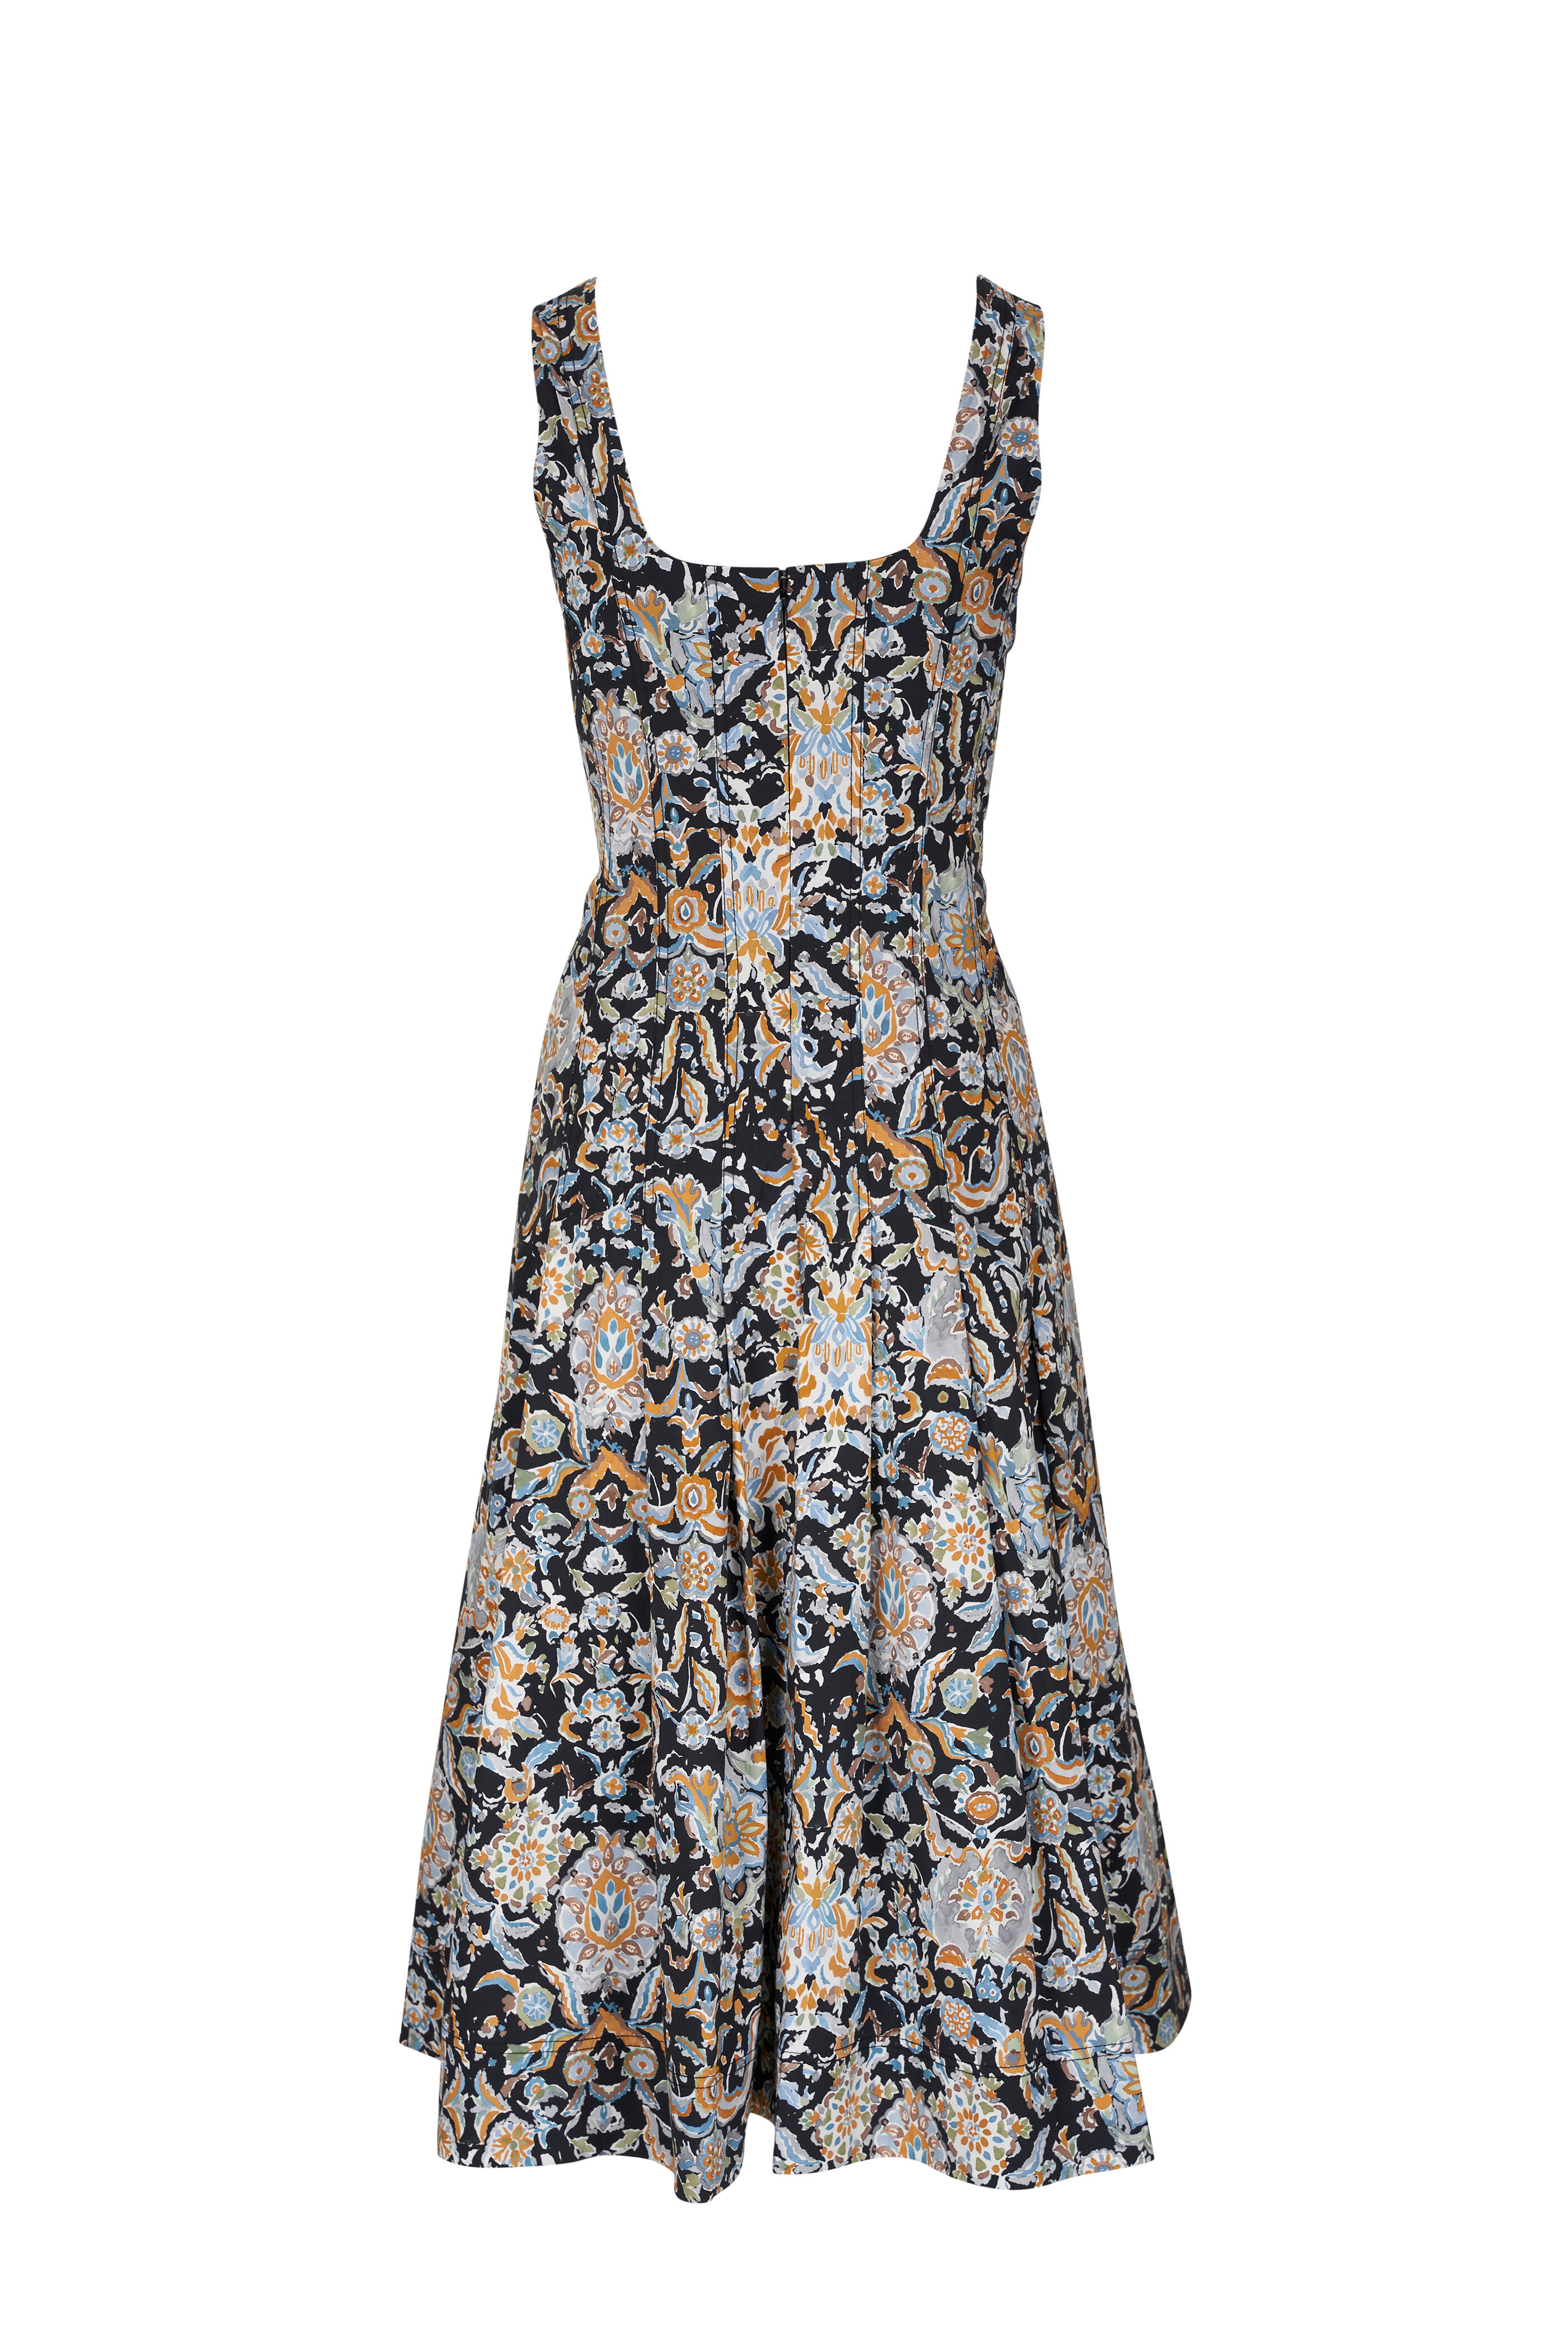 Veronica Beard - Jolie Black Multi Paisley Print Dress